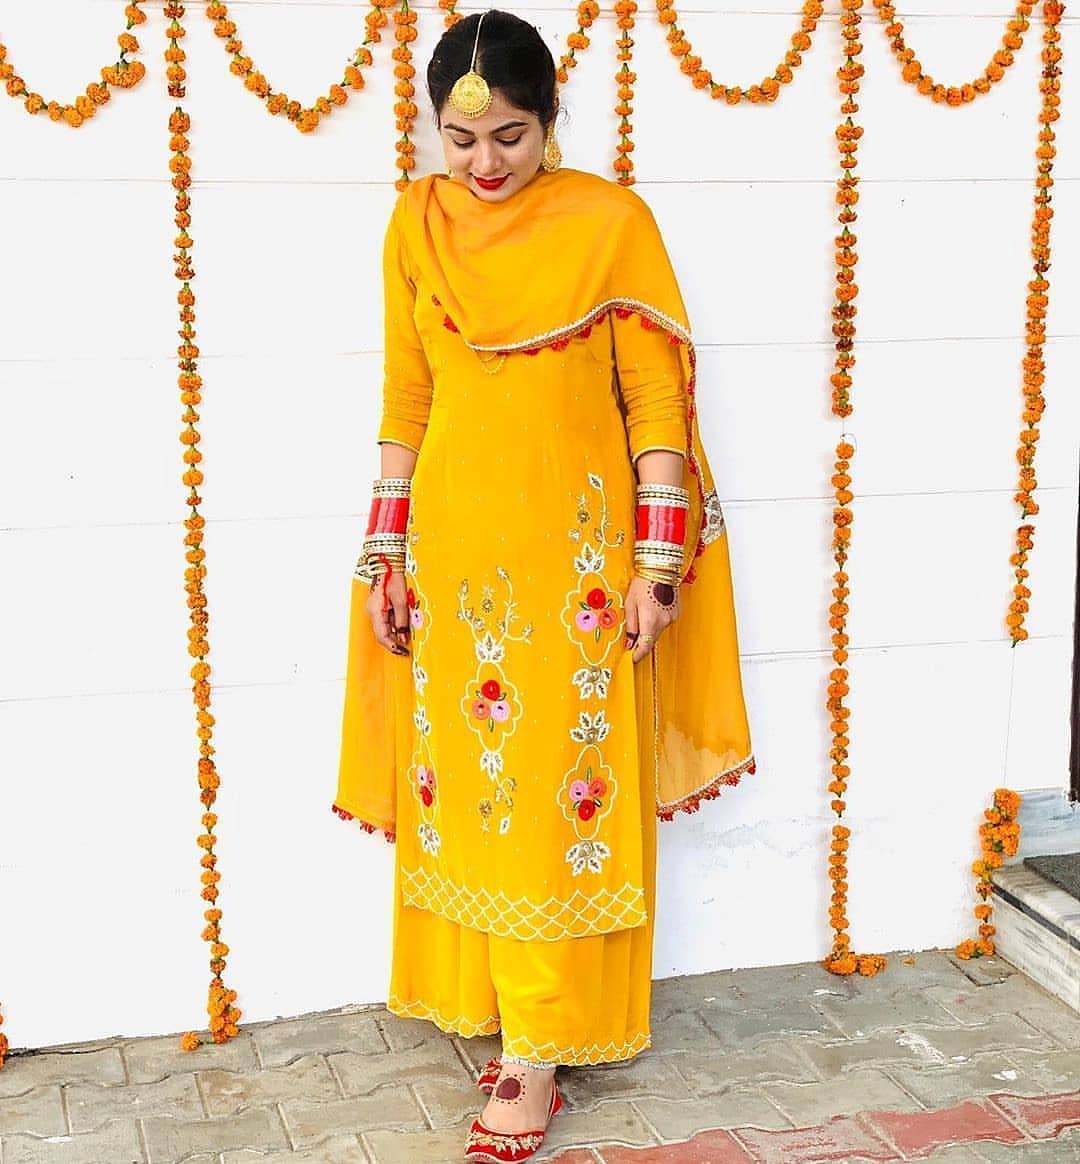 Latest Punjabi Wedding Dresses For Female/Guests In 2020 » Shasmajor